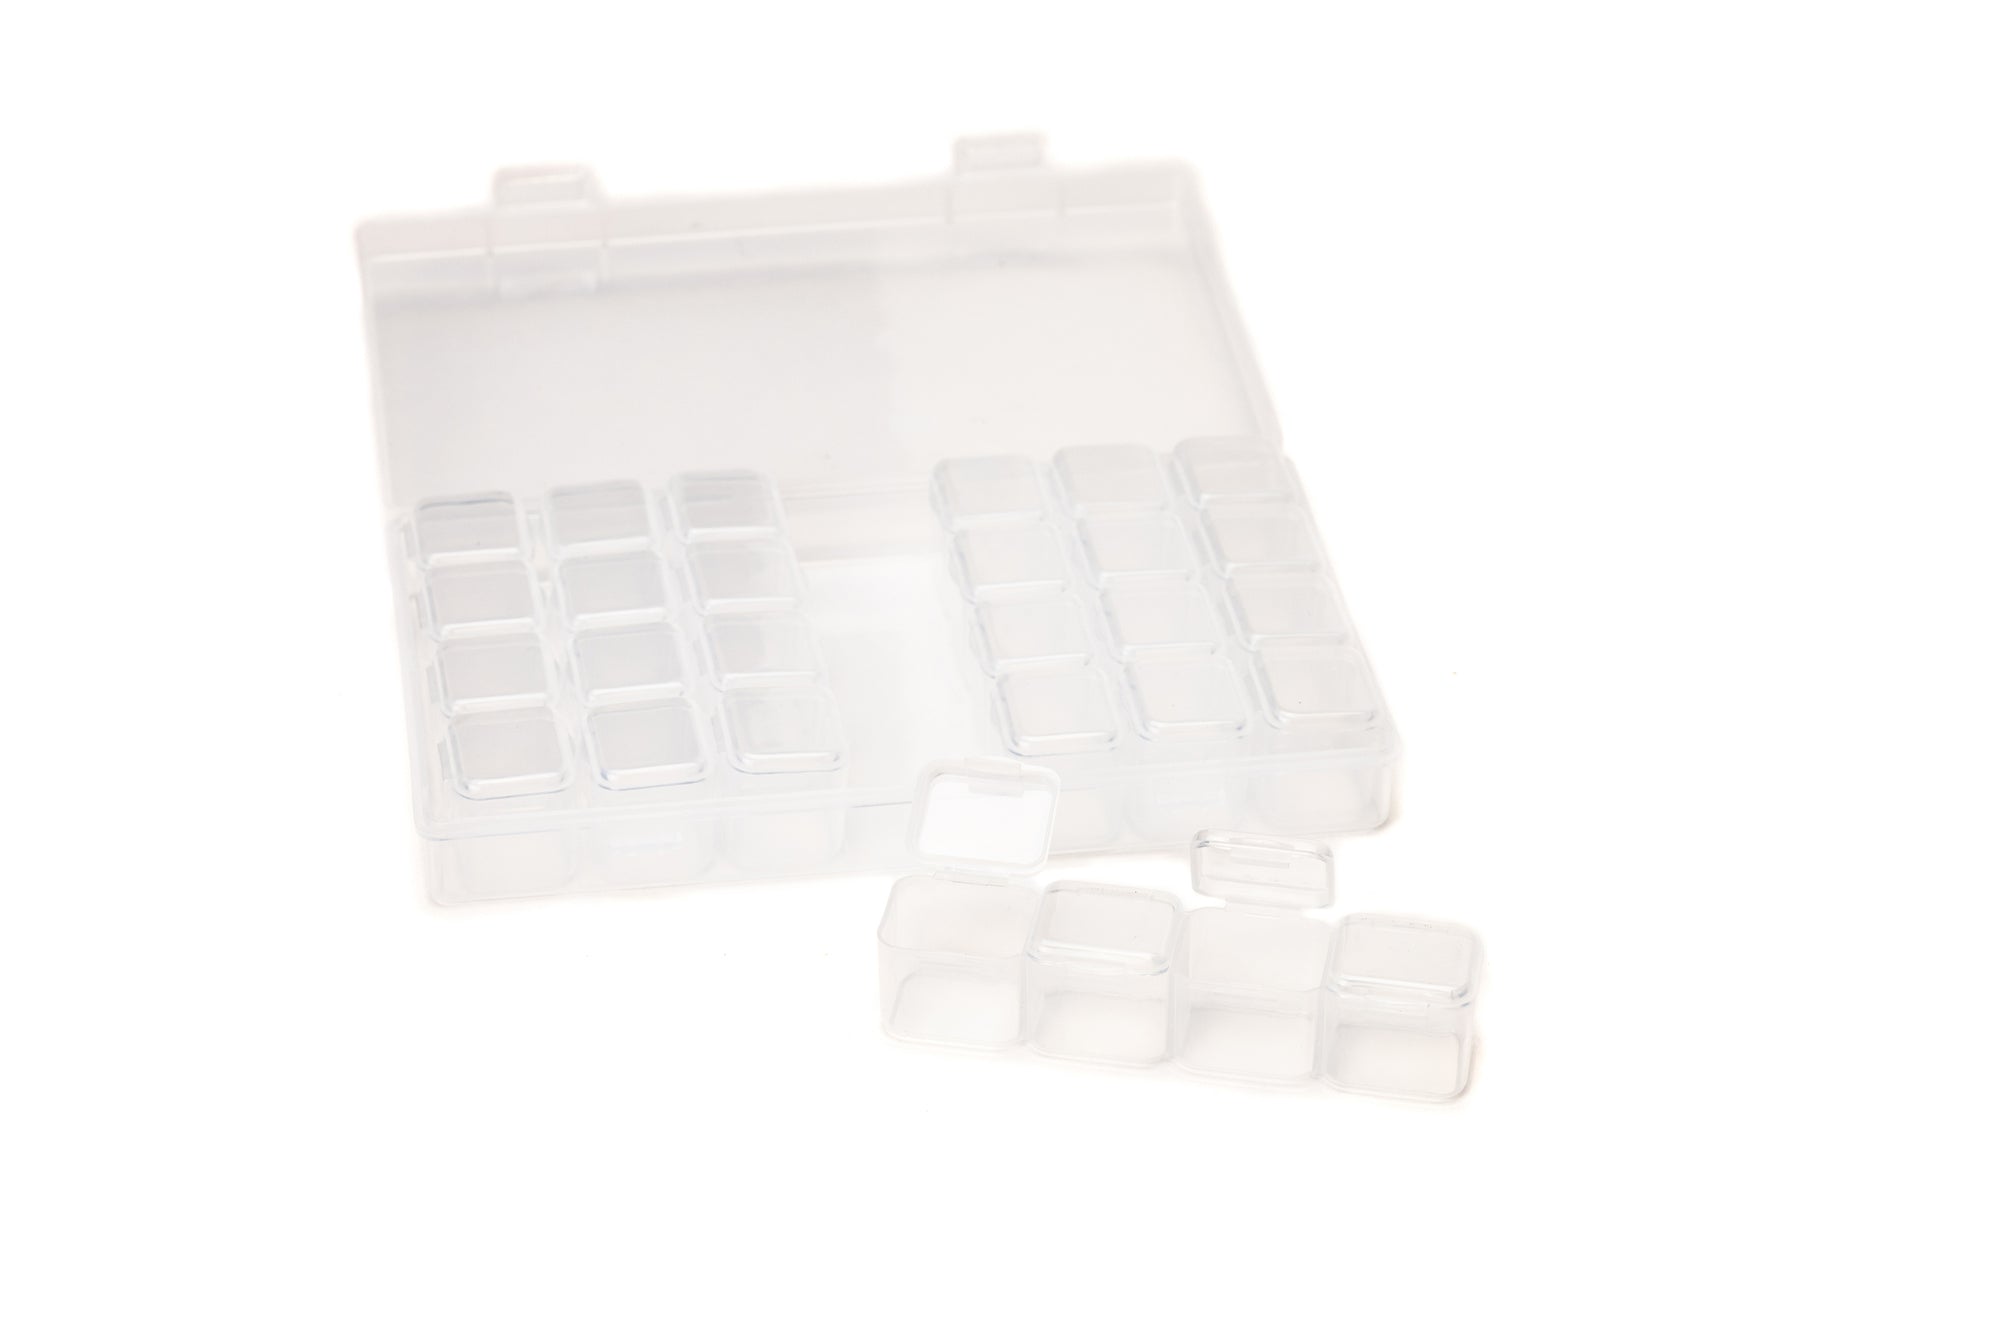 ZOQINI Bead Organizer Box, 28Pcs Small Clear Plastic Storage Containers, 1  Large Craft Organizer Box, 1 Sheet Label, Mini Parts Storage Solution for